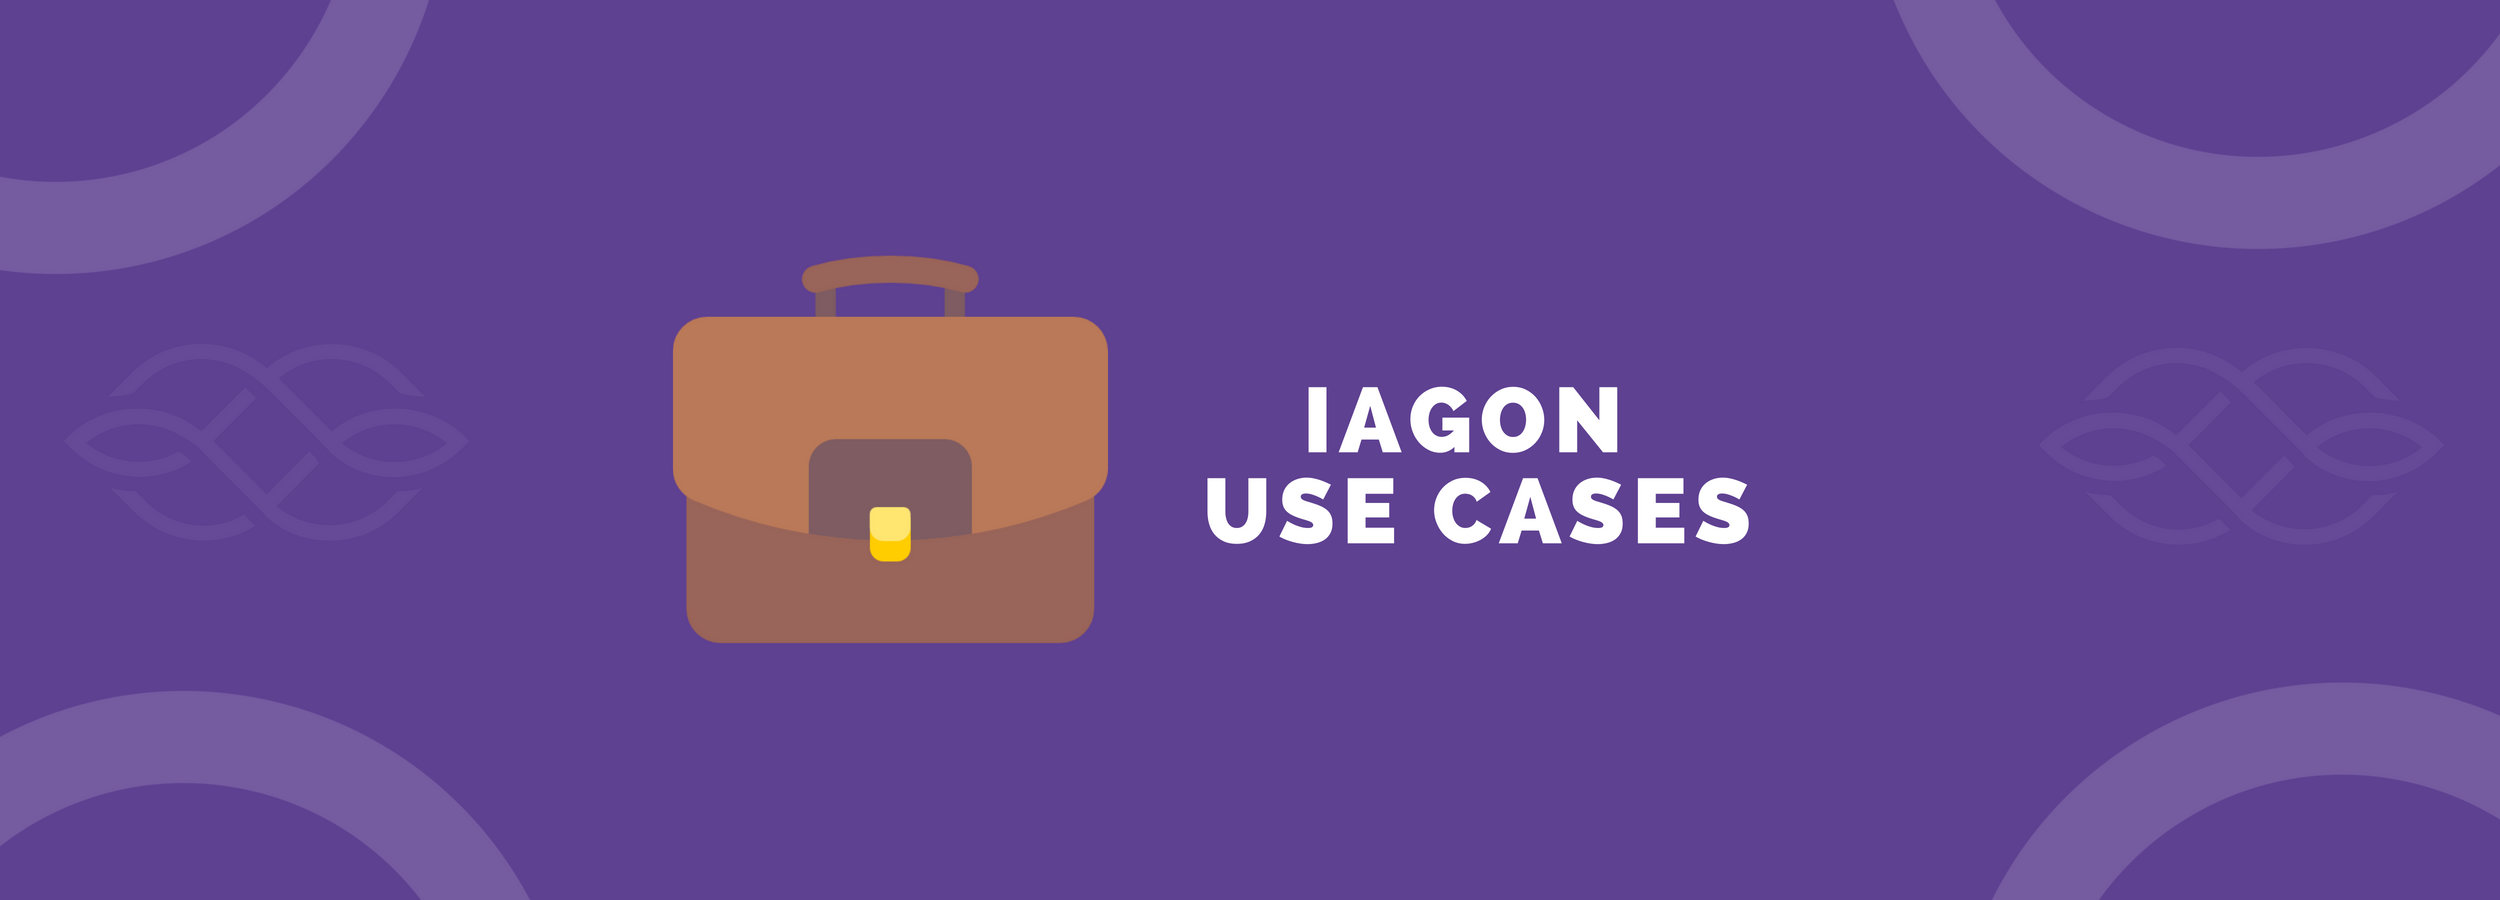 IAGON USE CASES: Imagine a World where Anyone can Profit